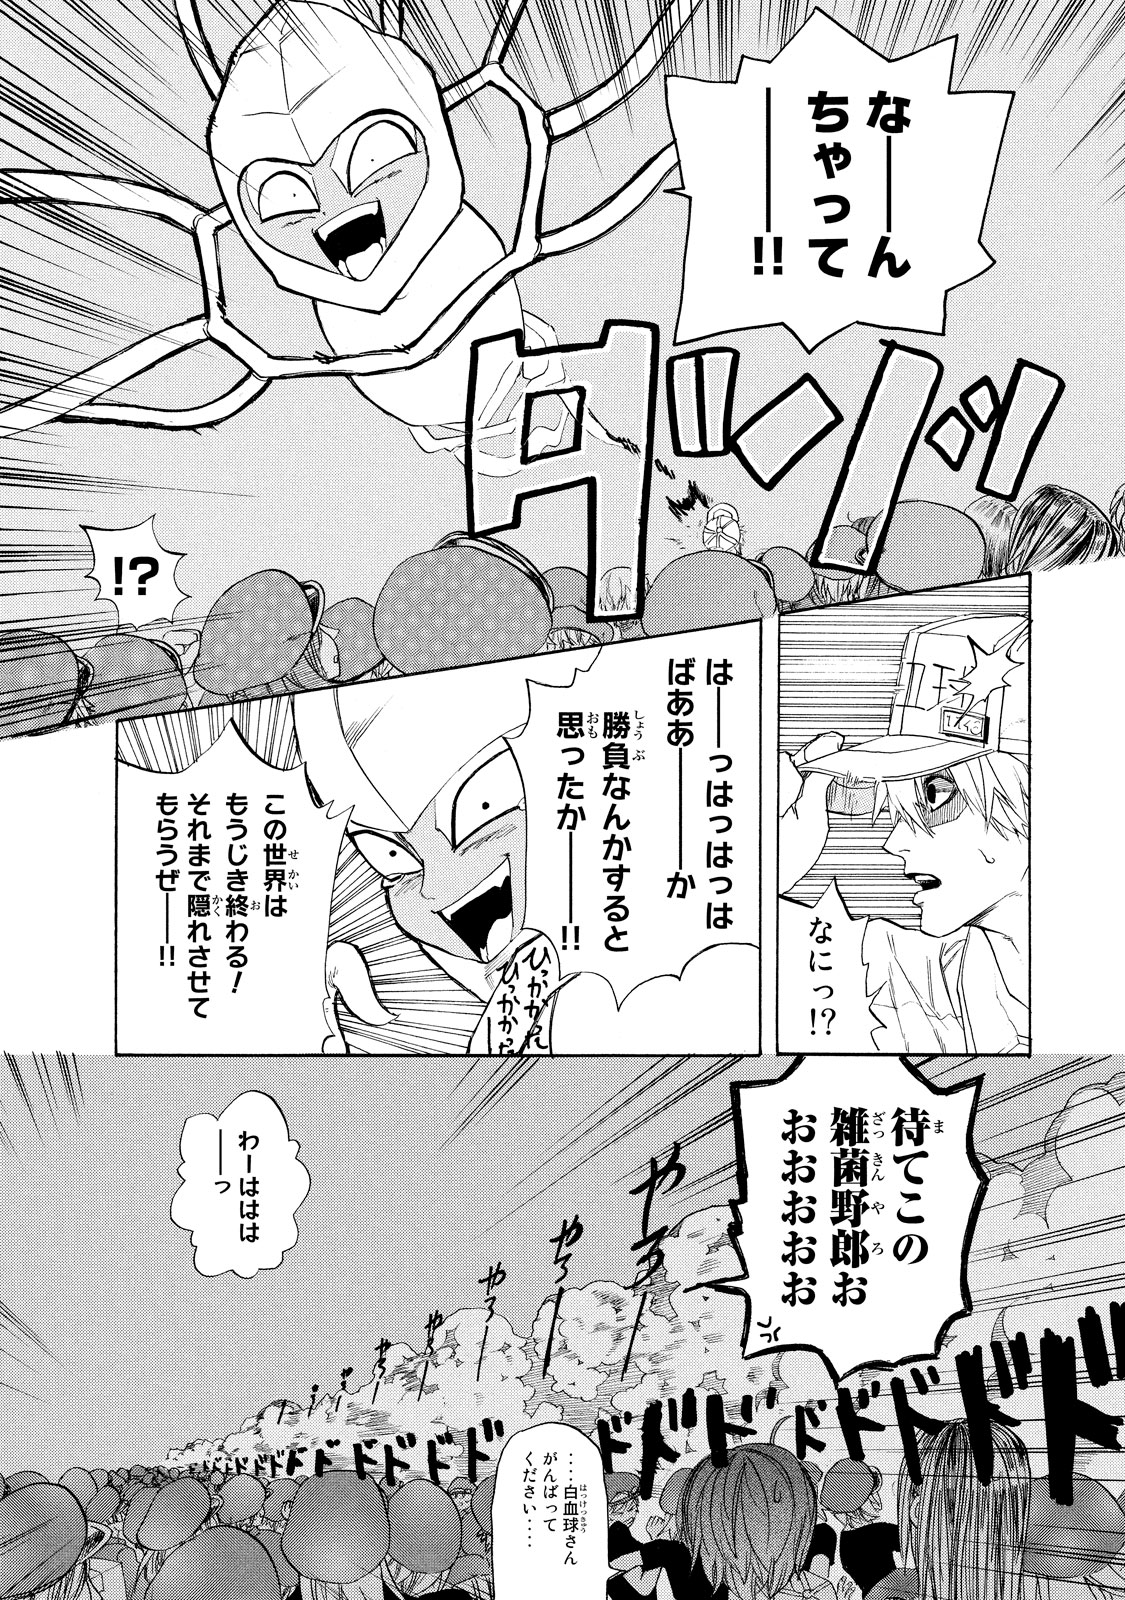 Hataraku Saibou - Chapter 6 - Page 13